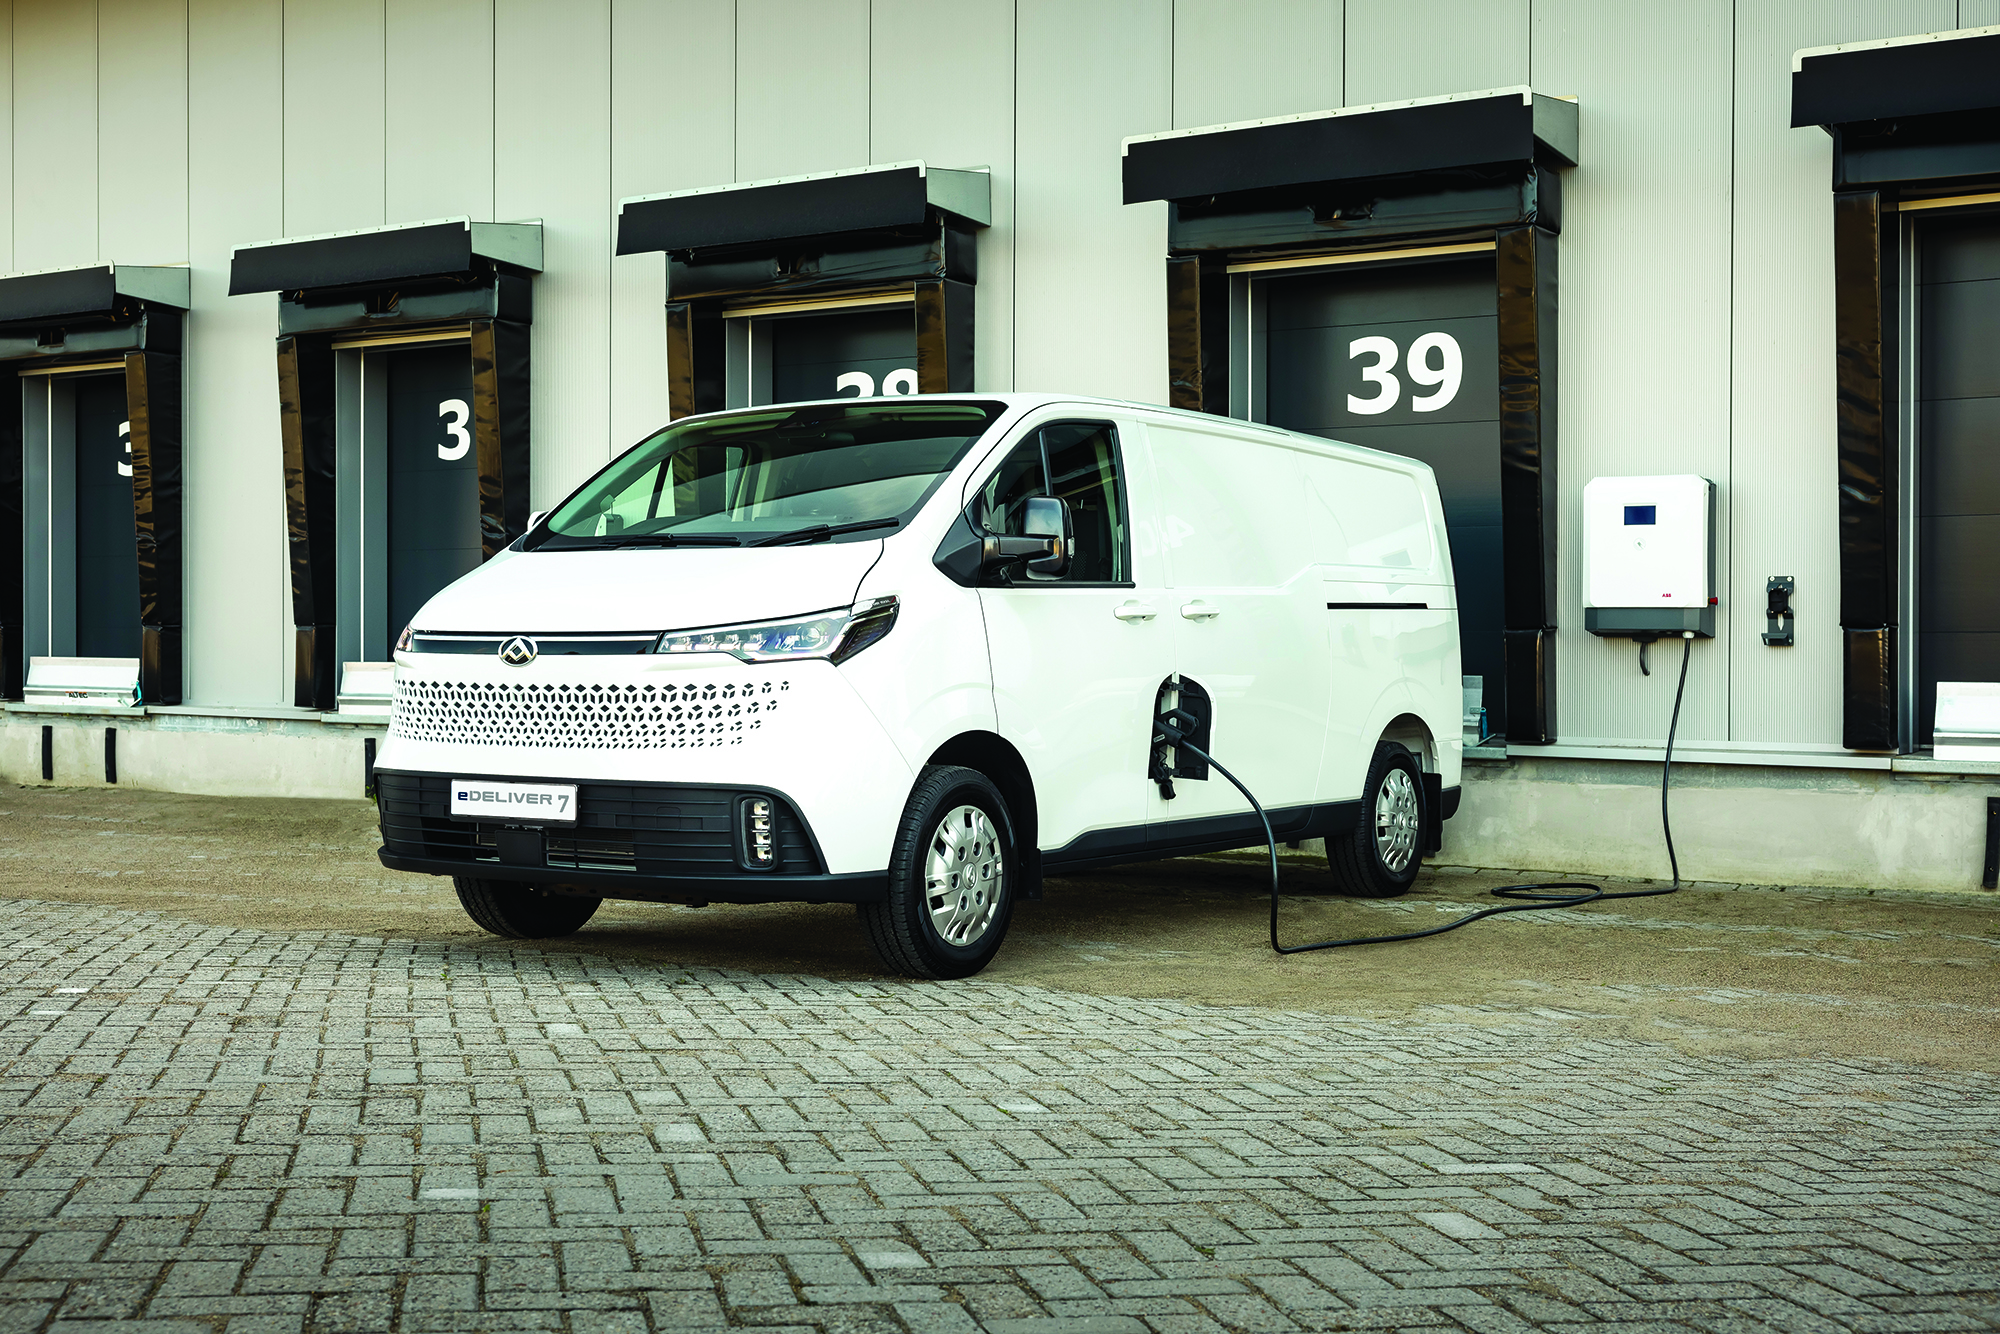 Maxus eDeliver7 one-ton electric van arrives in Benelux 